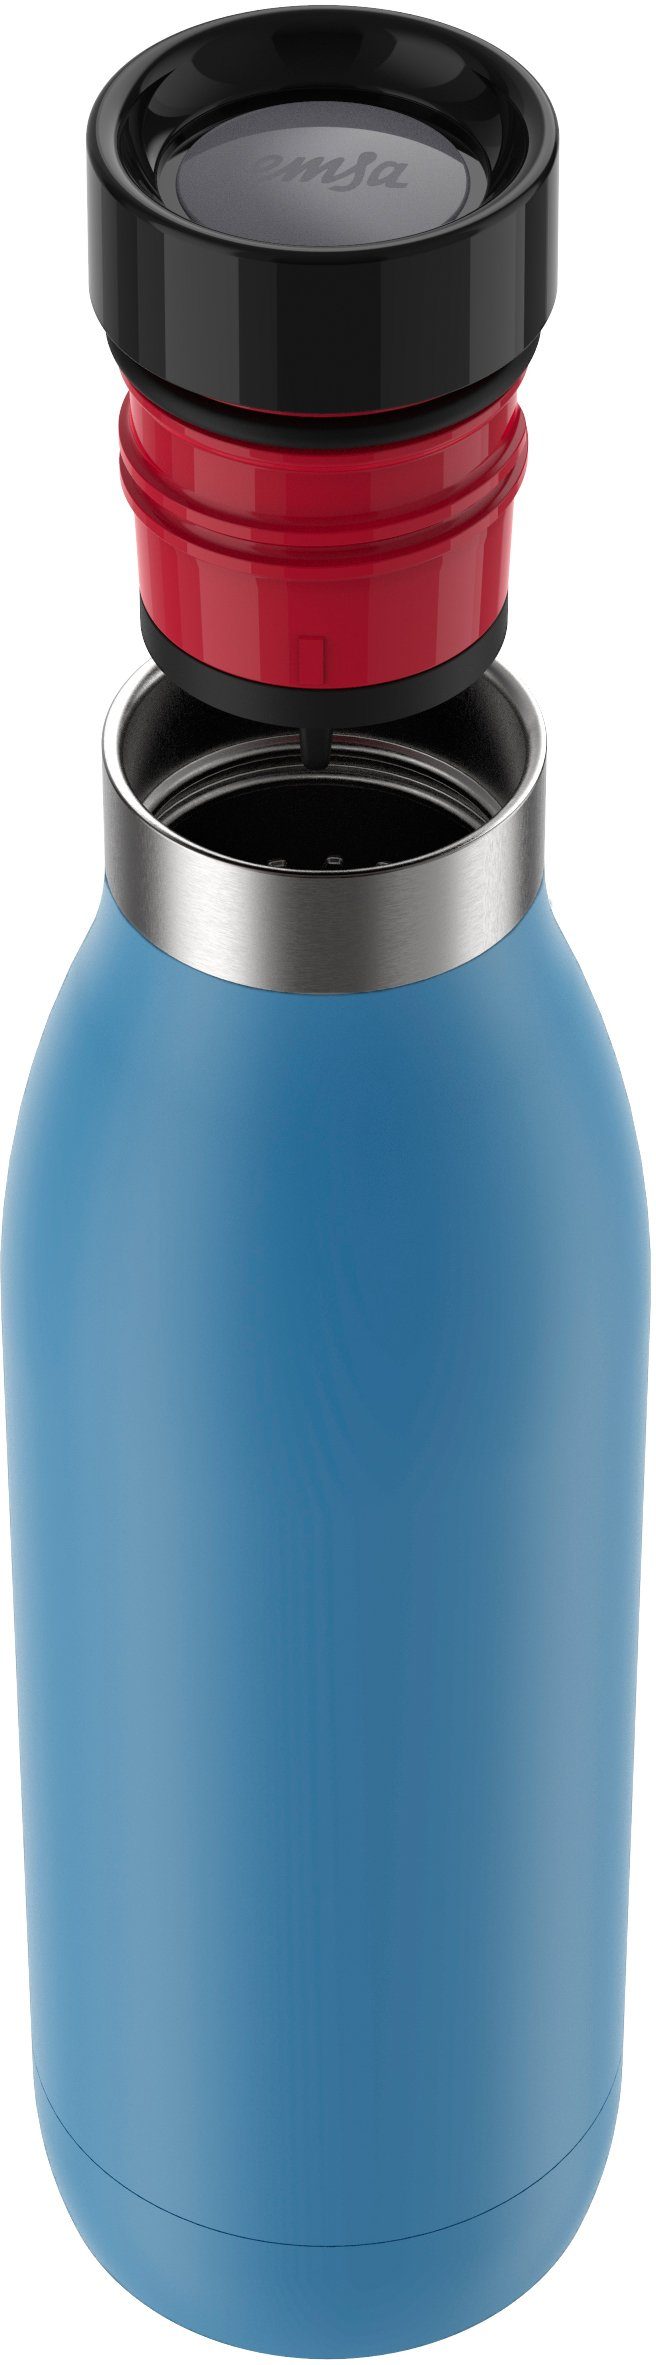 aquablau Trinkflasche warm/24h 12h Deckel, spülmaschinenfest Edelstahl, Color, kühl, Bludrop Quick-Press Emsa